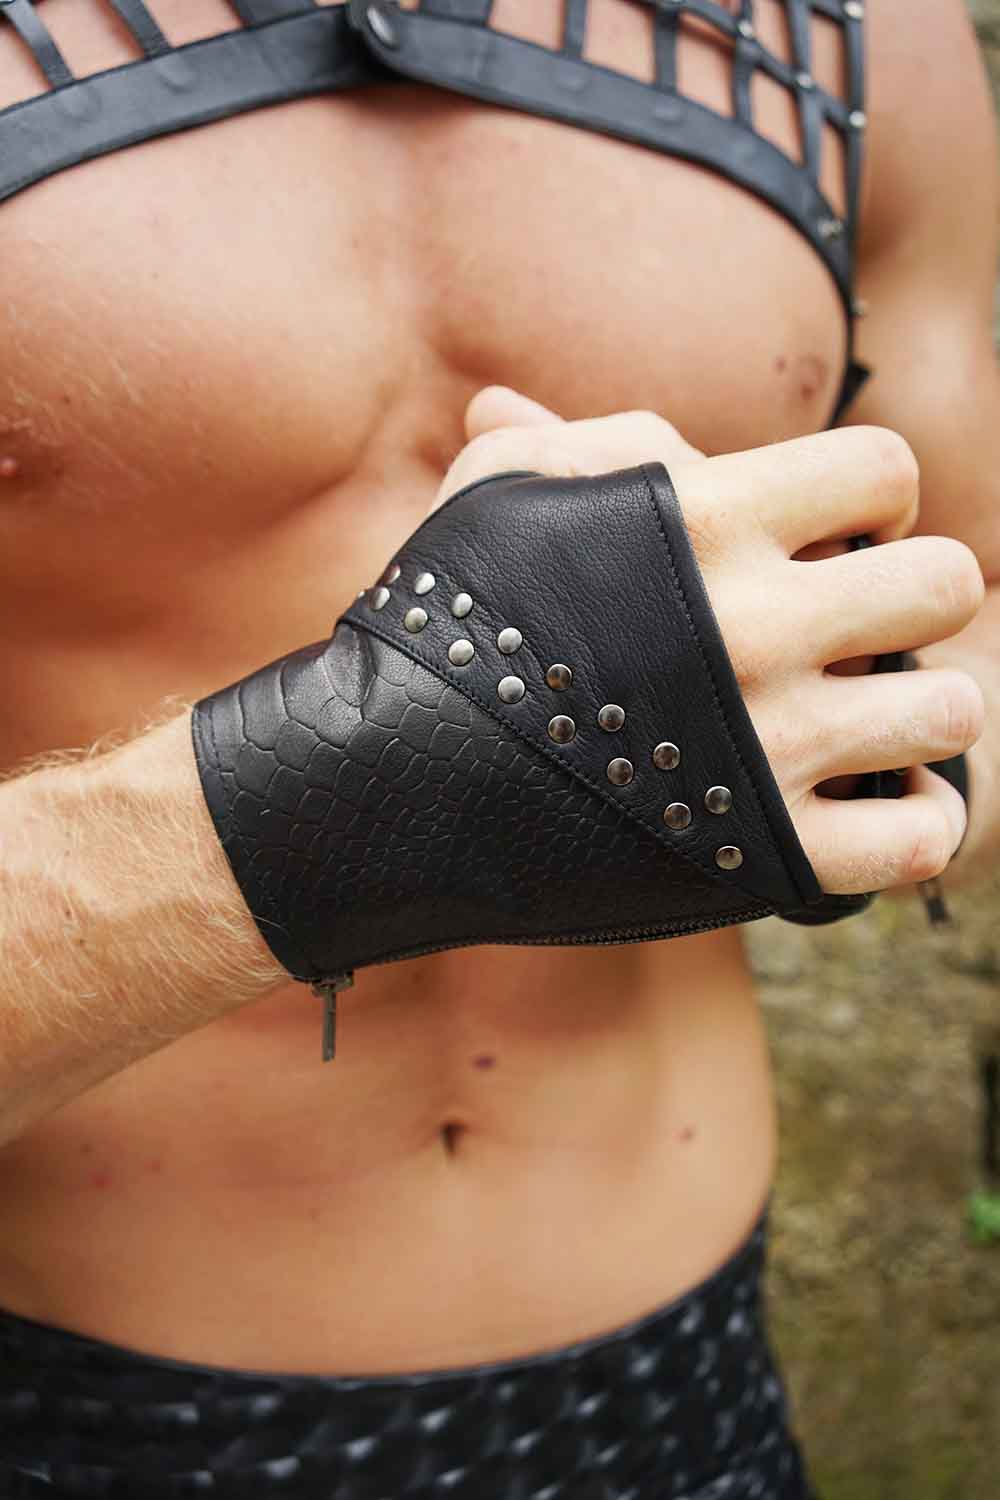 Anubis Mens Fingerless Leather Gloves from Love Khaos Festival Clothing brand